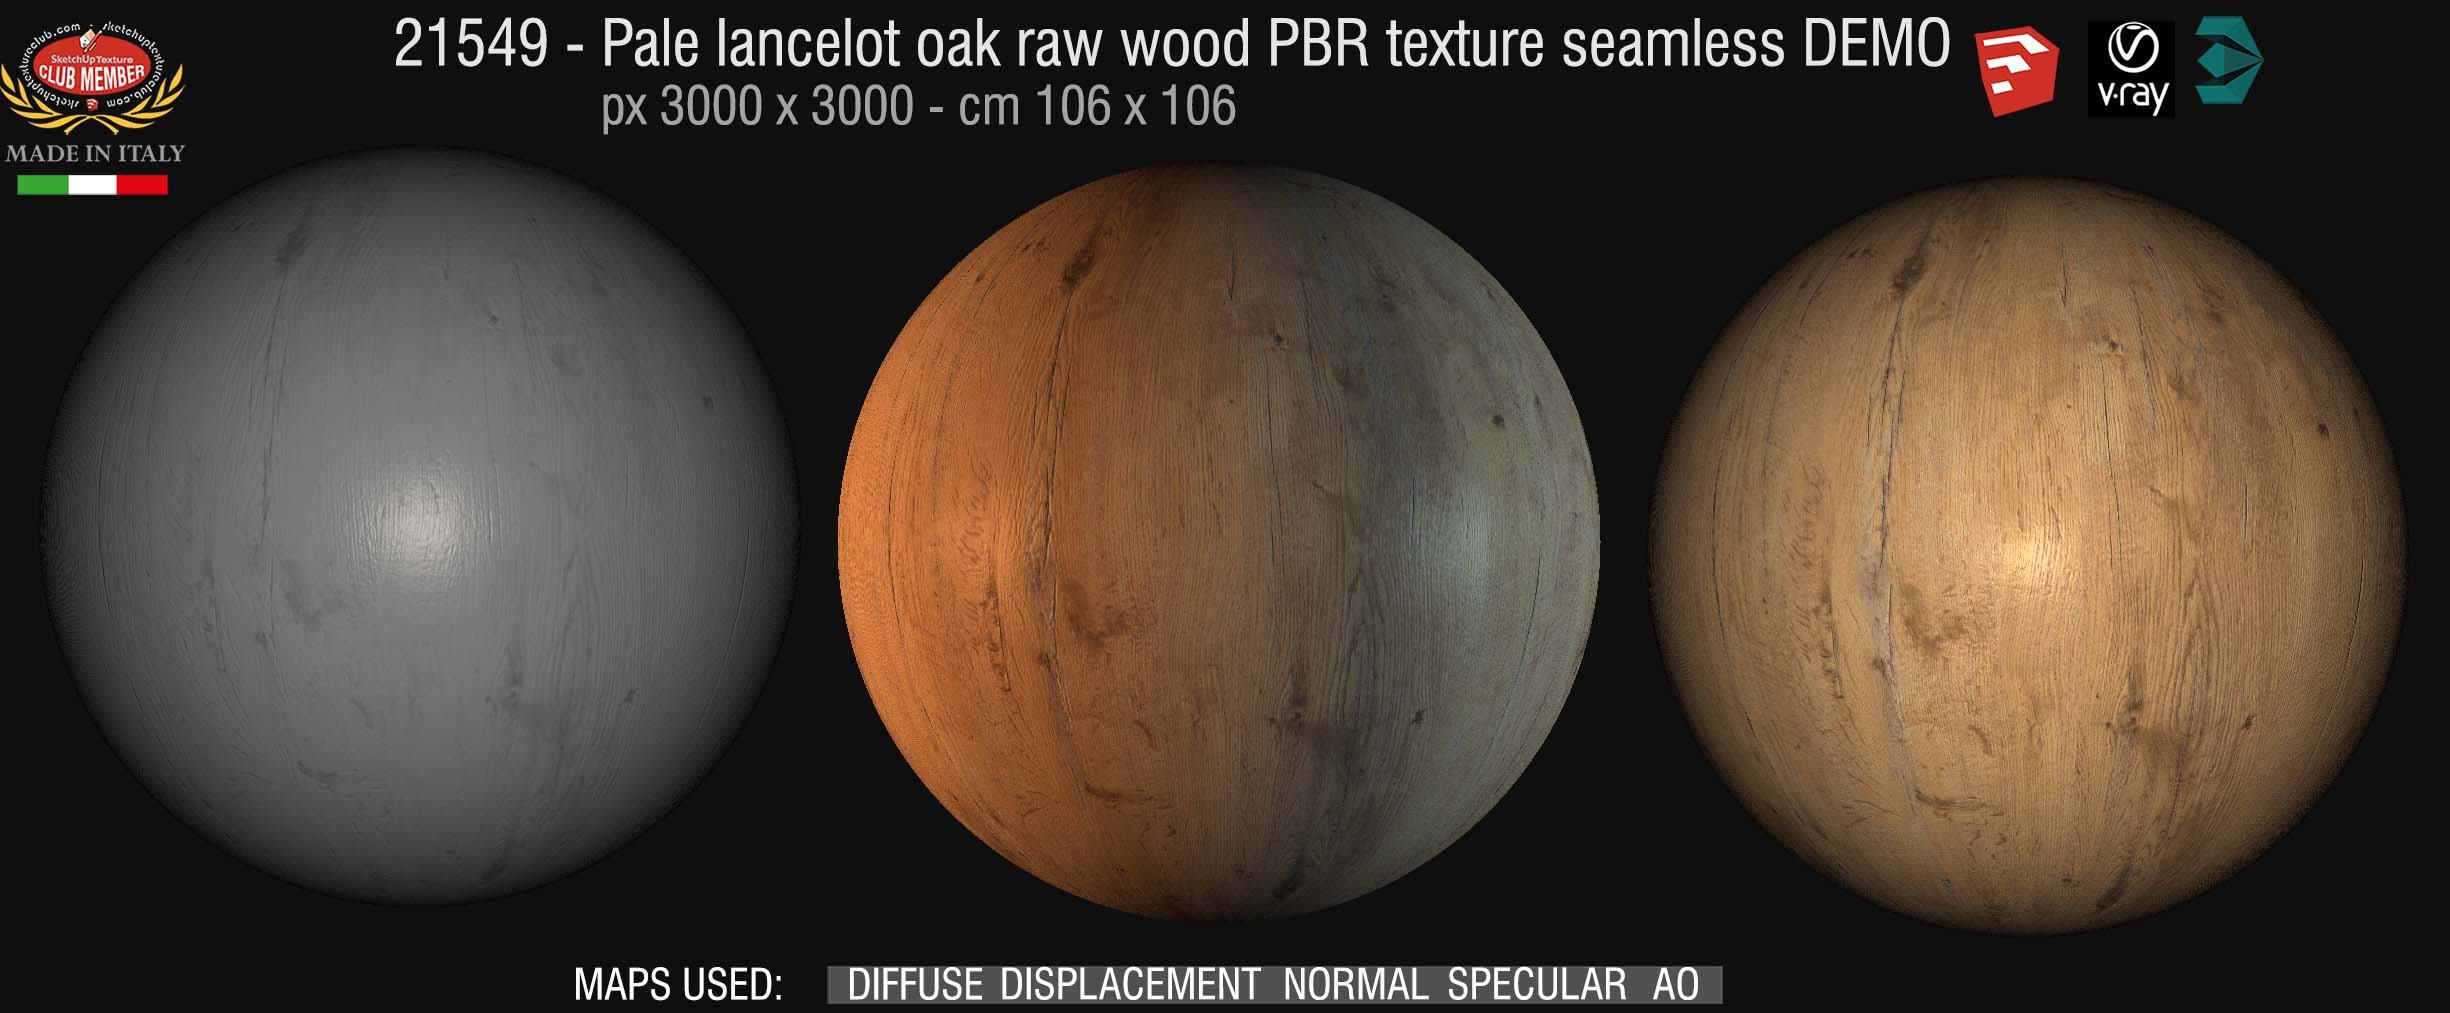 21459 Pale lancelot oak raw PBR texture seamless DEMO